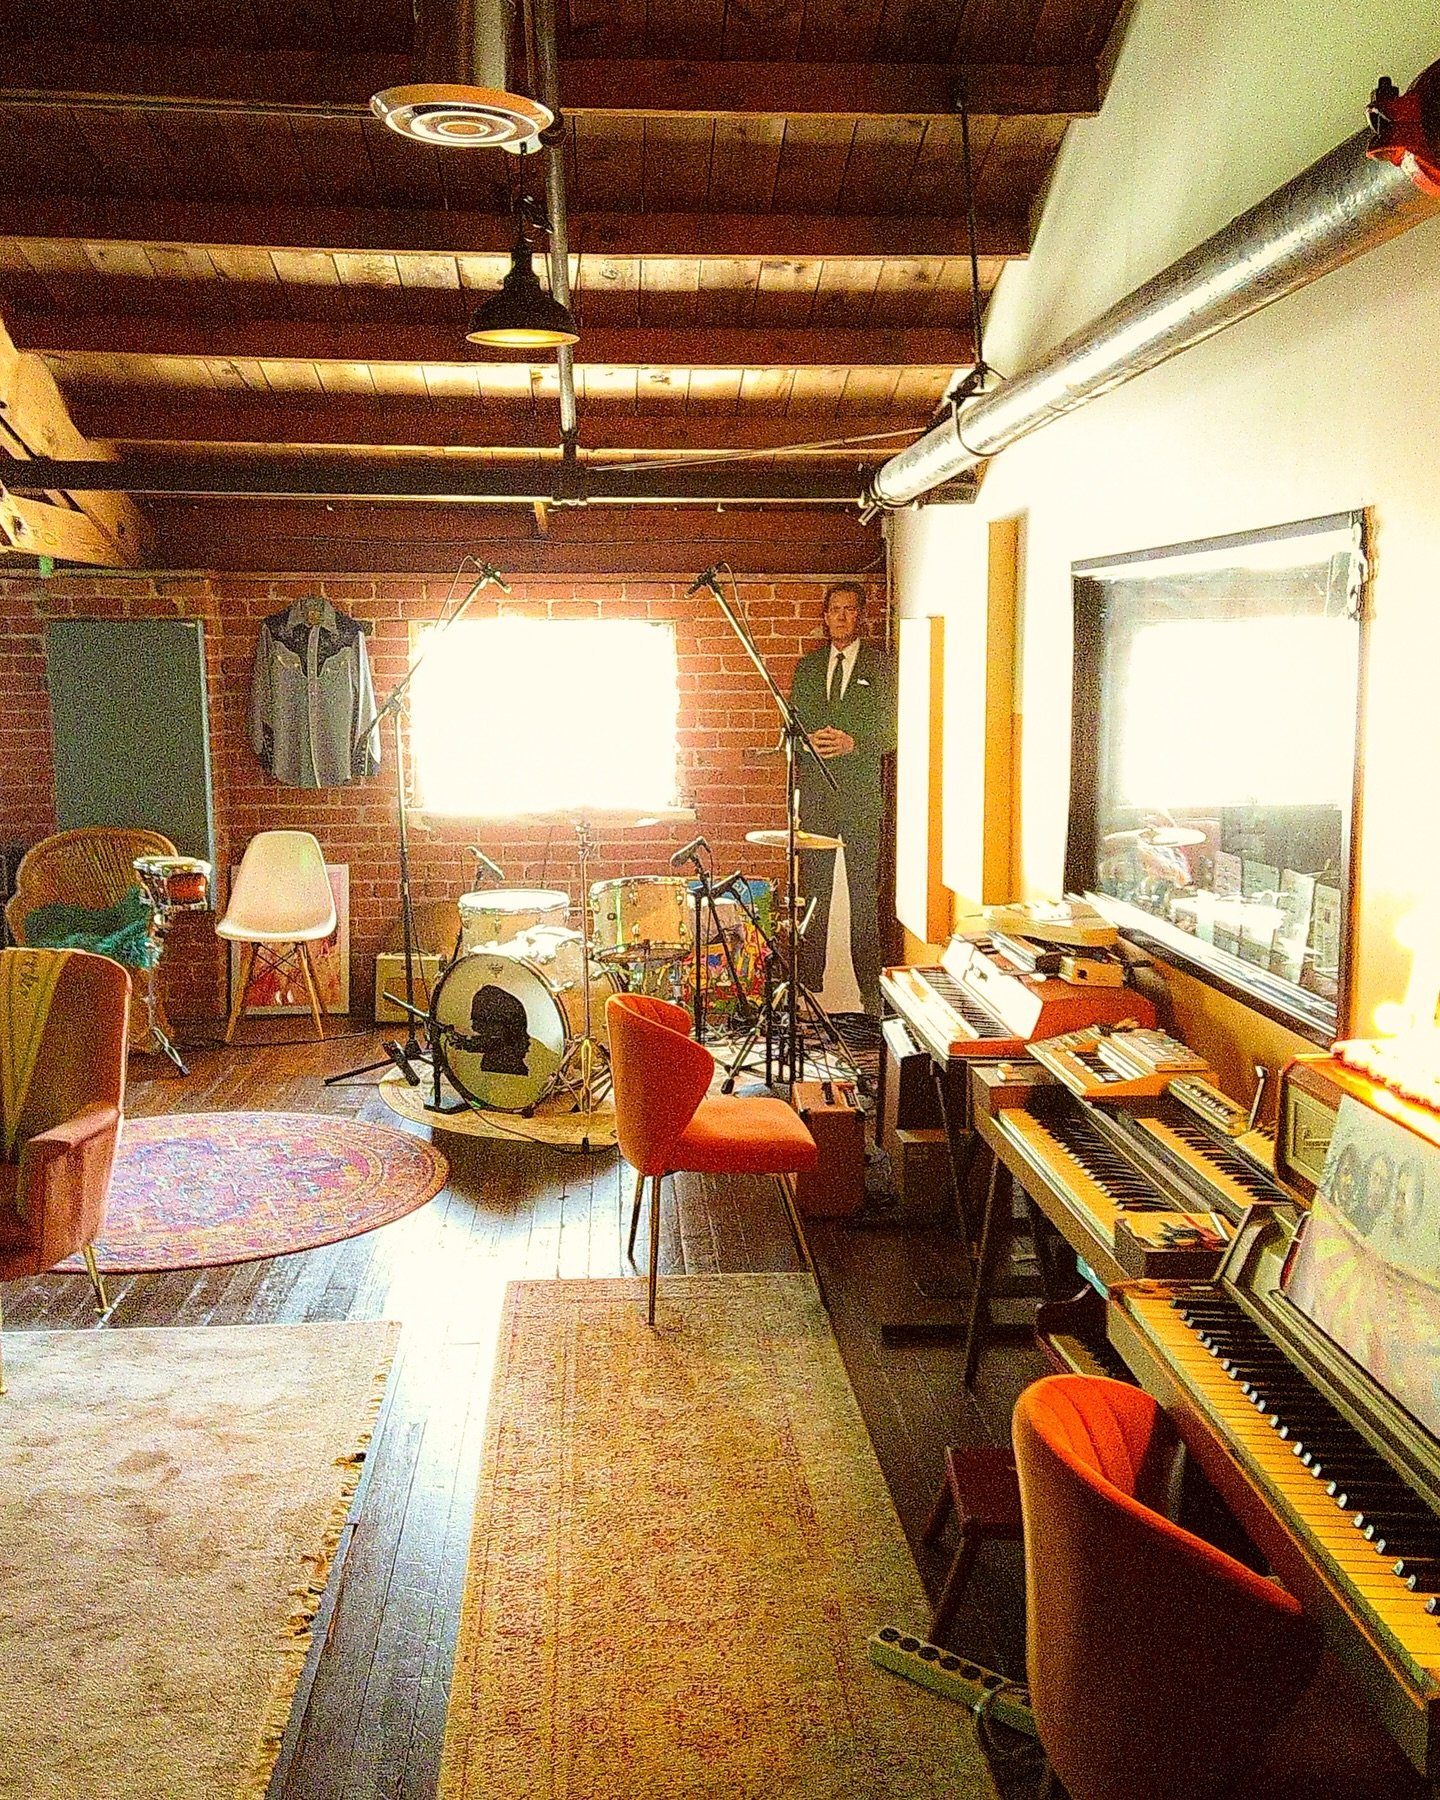 Imagine playing music here? 🎶 #secretroom #spotagentcooper #dreamsetup